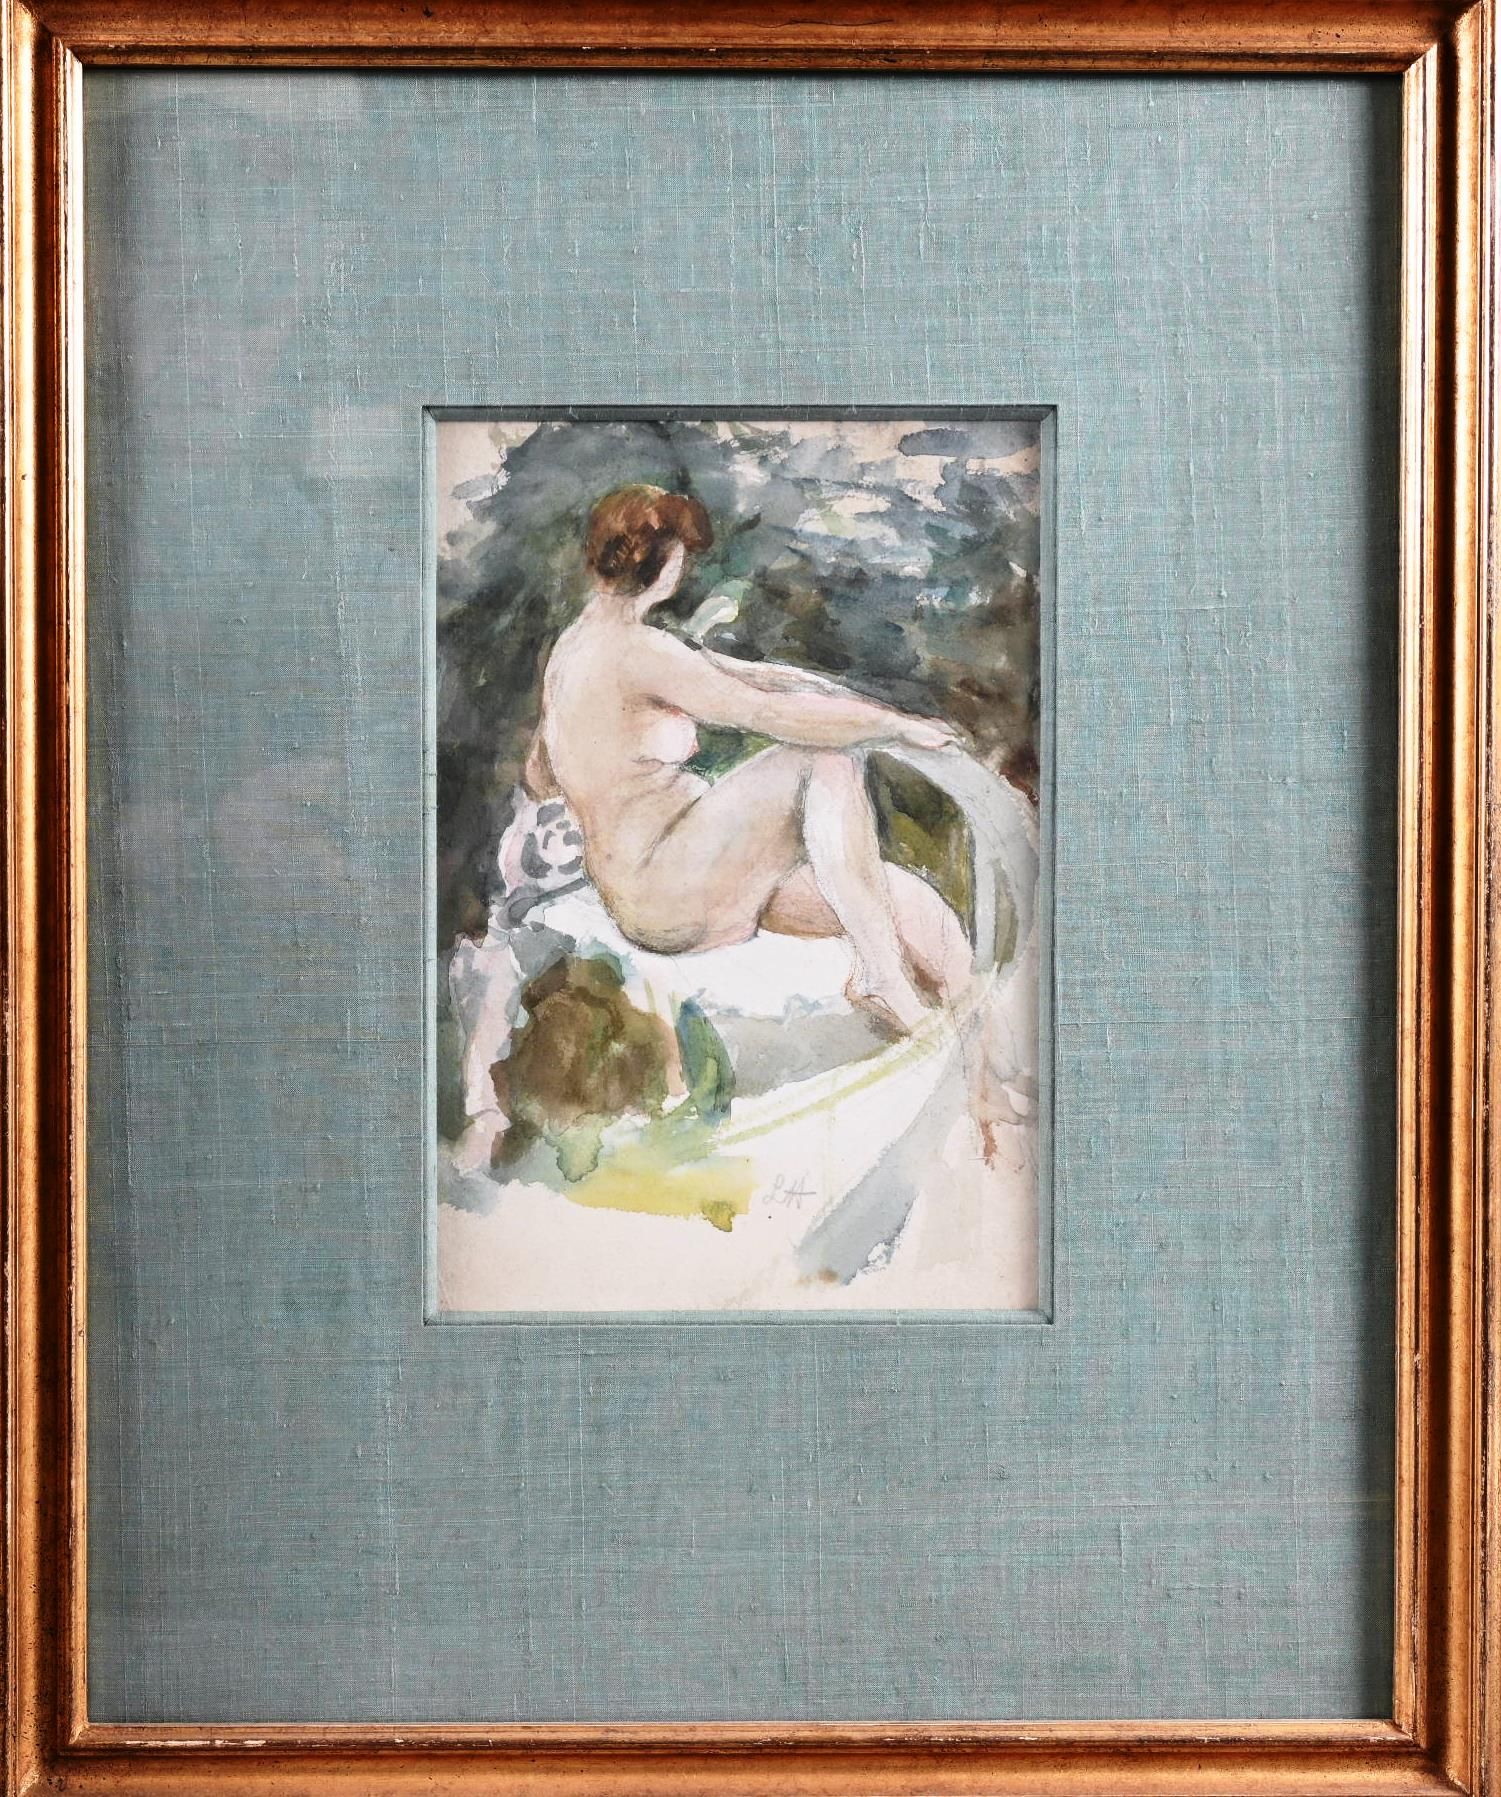 Léon HOUYOUX aquarelle Léon HOUYOUX (1856 - 1940)

"Female nude on a bench".

Wa&hellip;